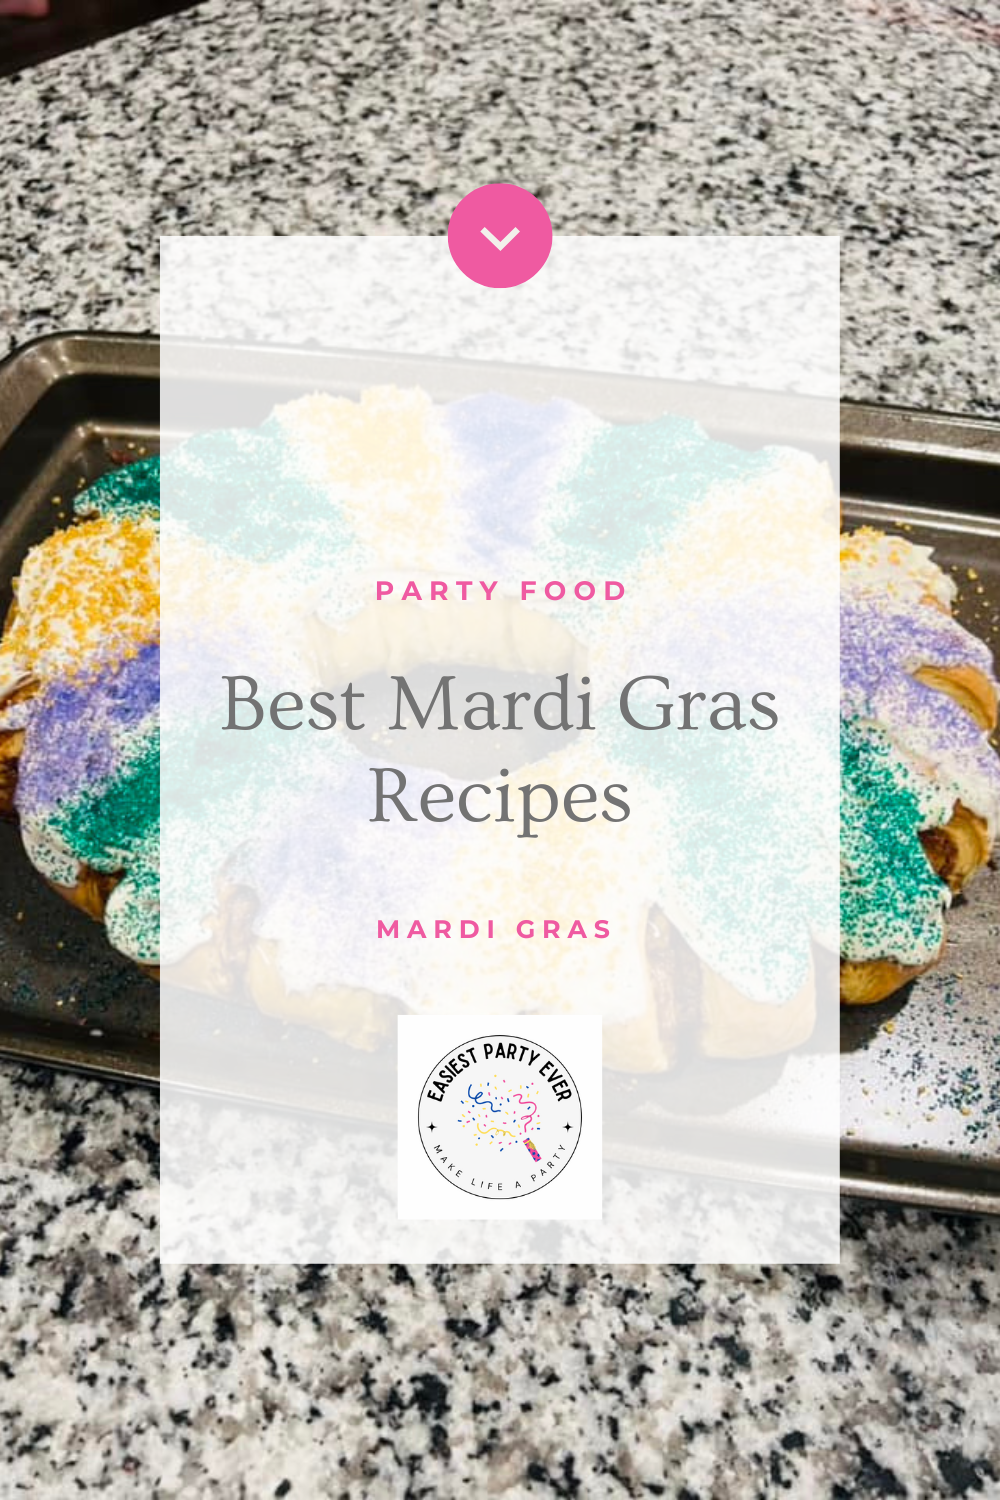 My Community’s Favorite Mardi Gras Recipes